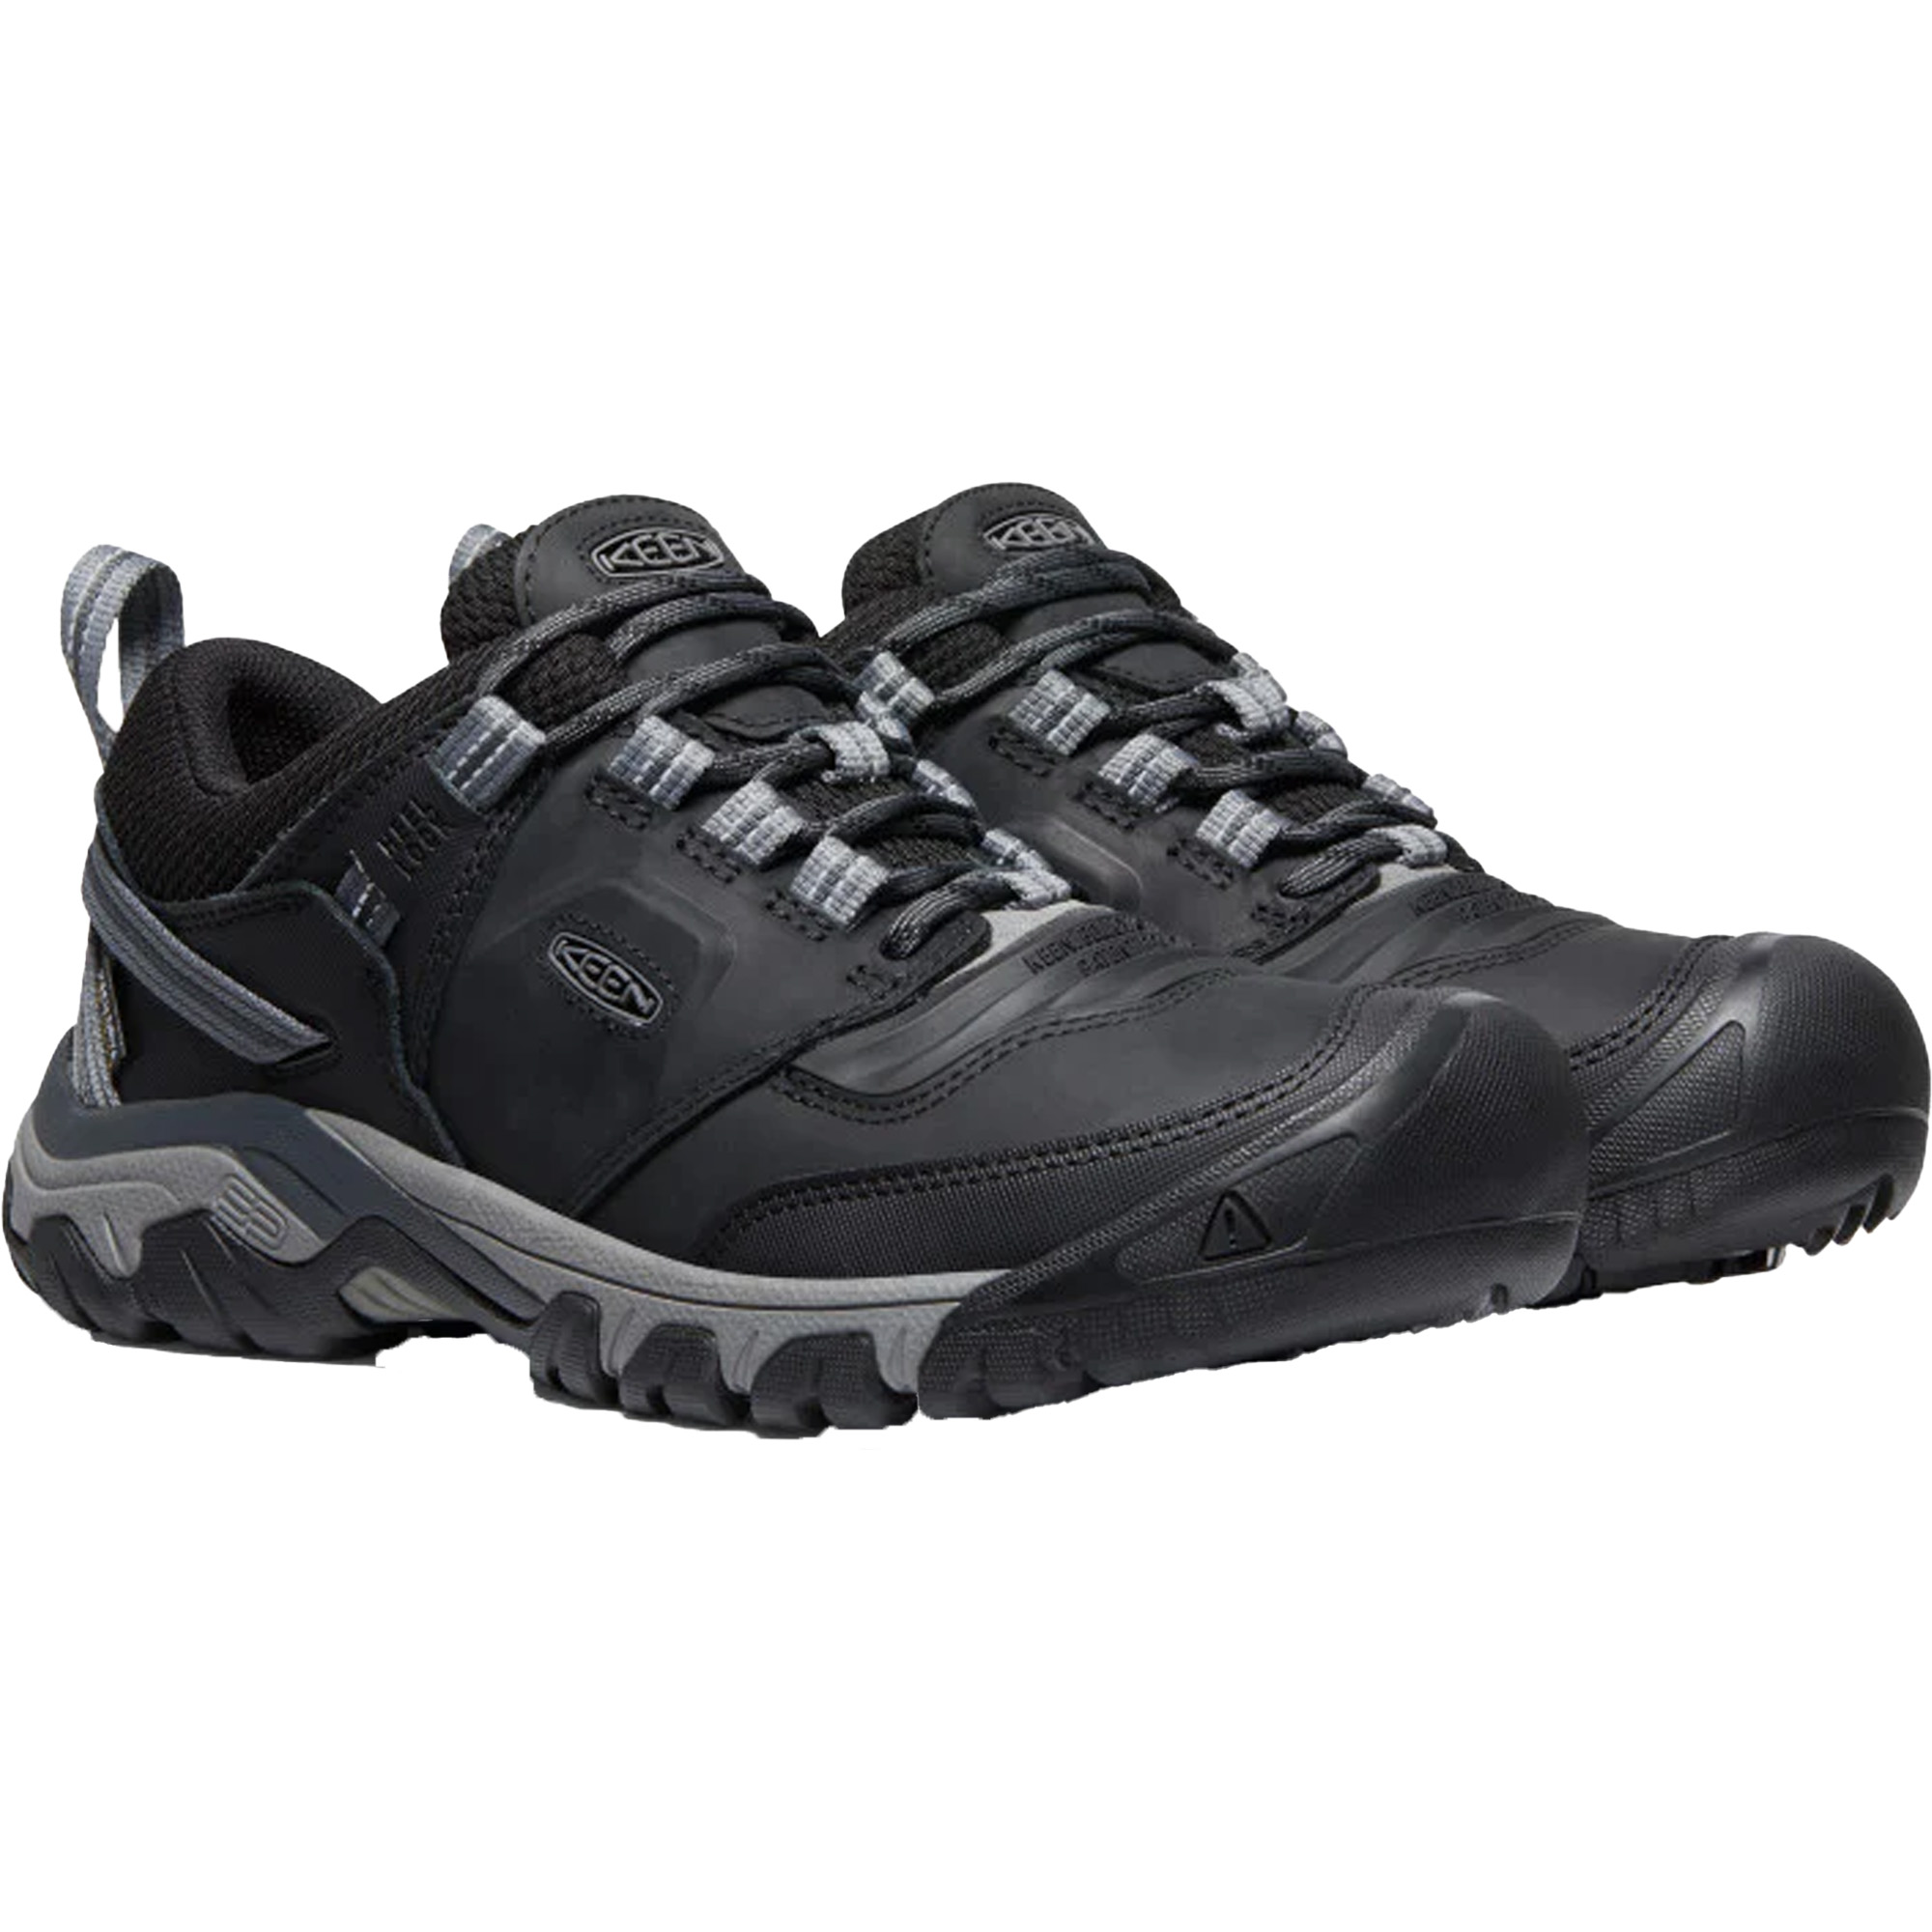 Keen Ridge Flex Waterproof Hiking Shoes